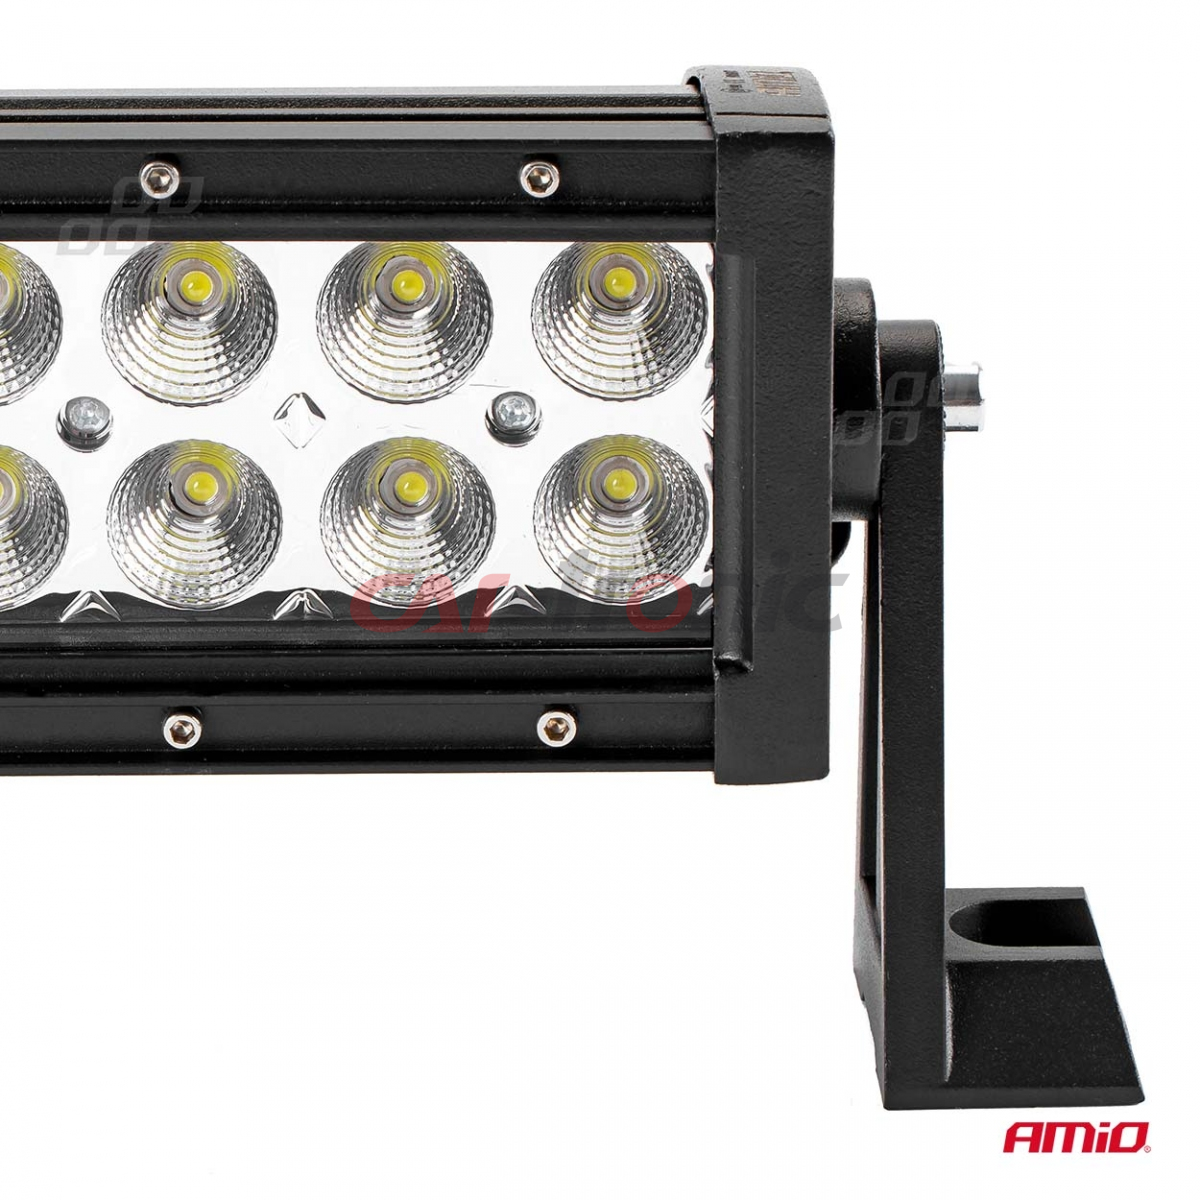 Lampa robocza panelowa LED BAR prosta 40 cm 9-36V AMIO-02437 AWL23